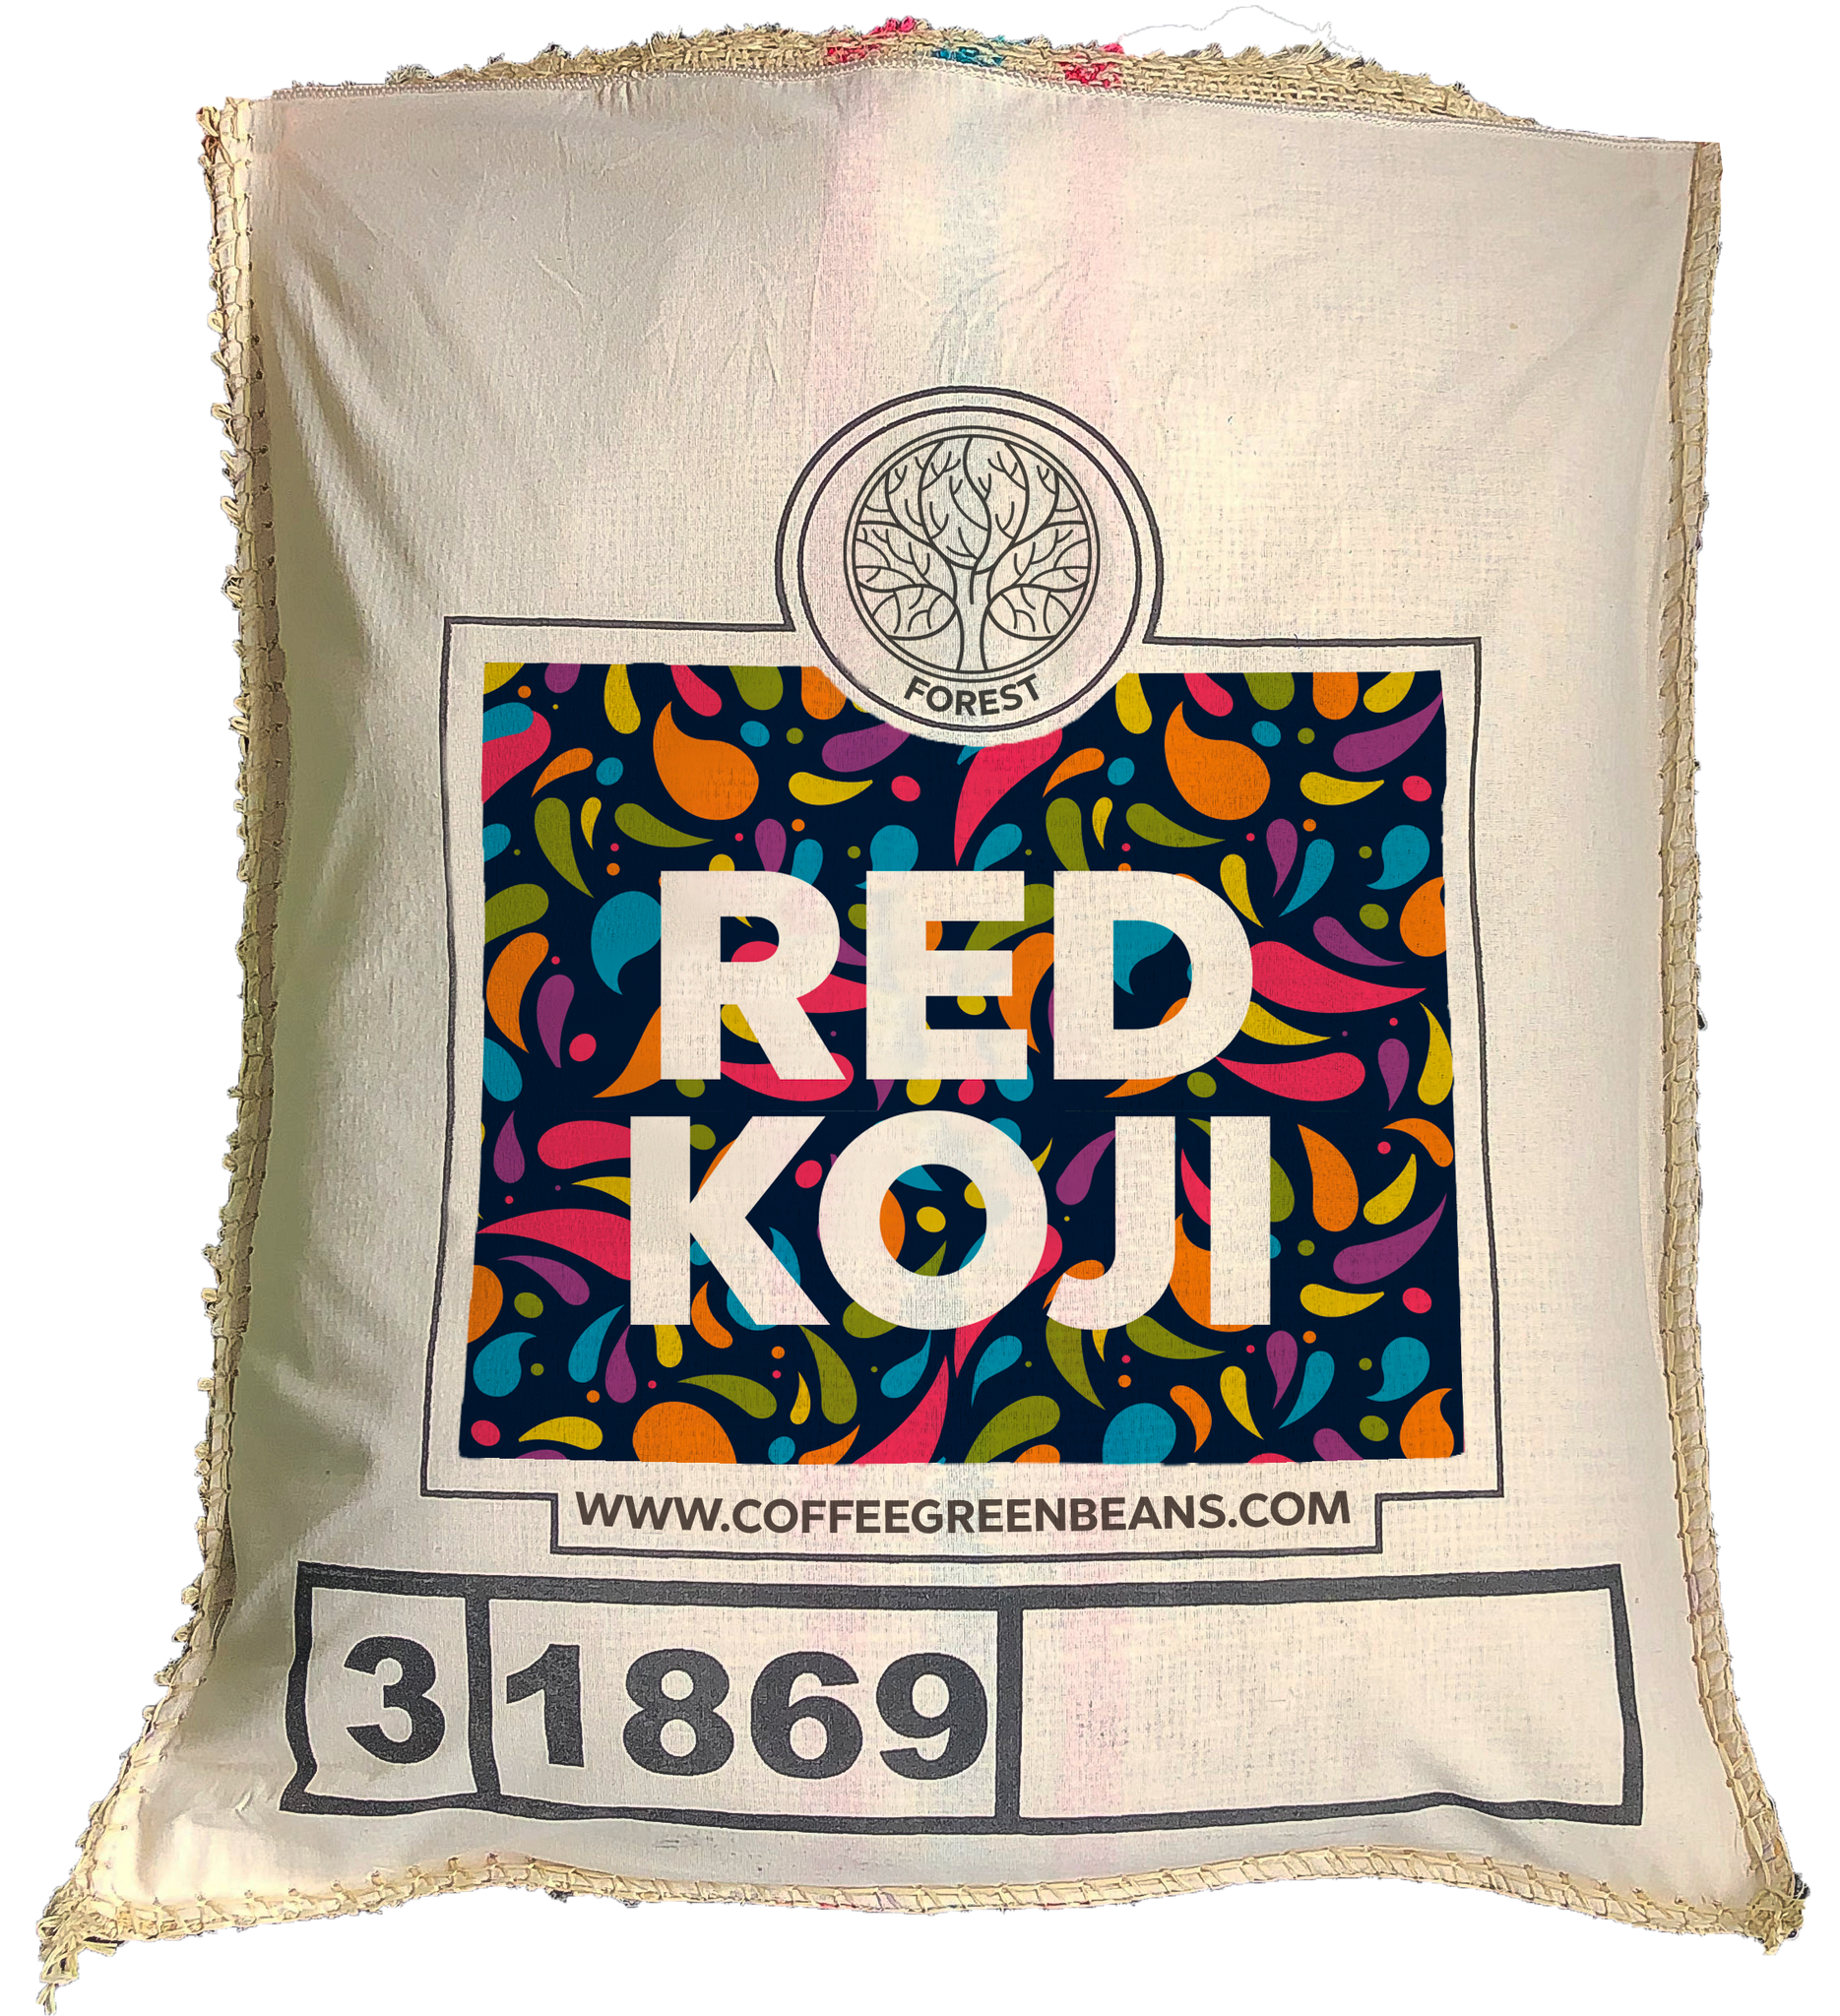 RED KOJI - Forest Coffee 